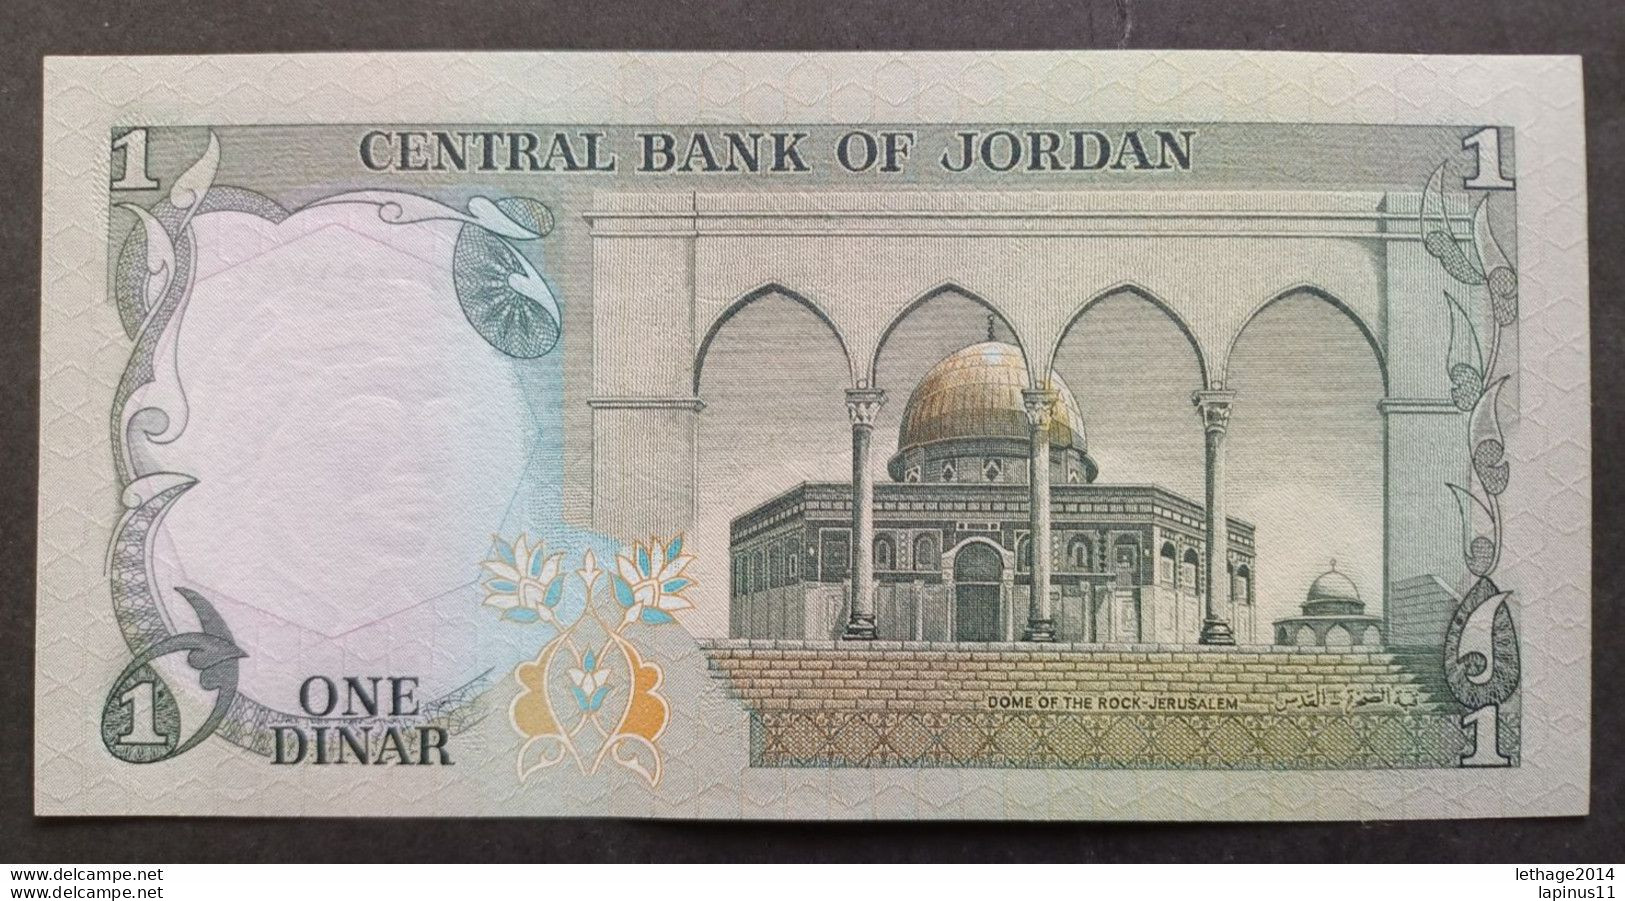 BANKNOTE الأردن JORDAN JORDAN 1 DINAR KING HUSSEIN 1975 UNCIRCULATED SUPERB ! - Jordan